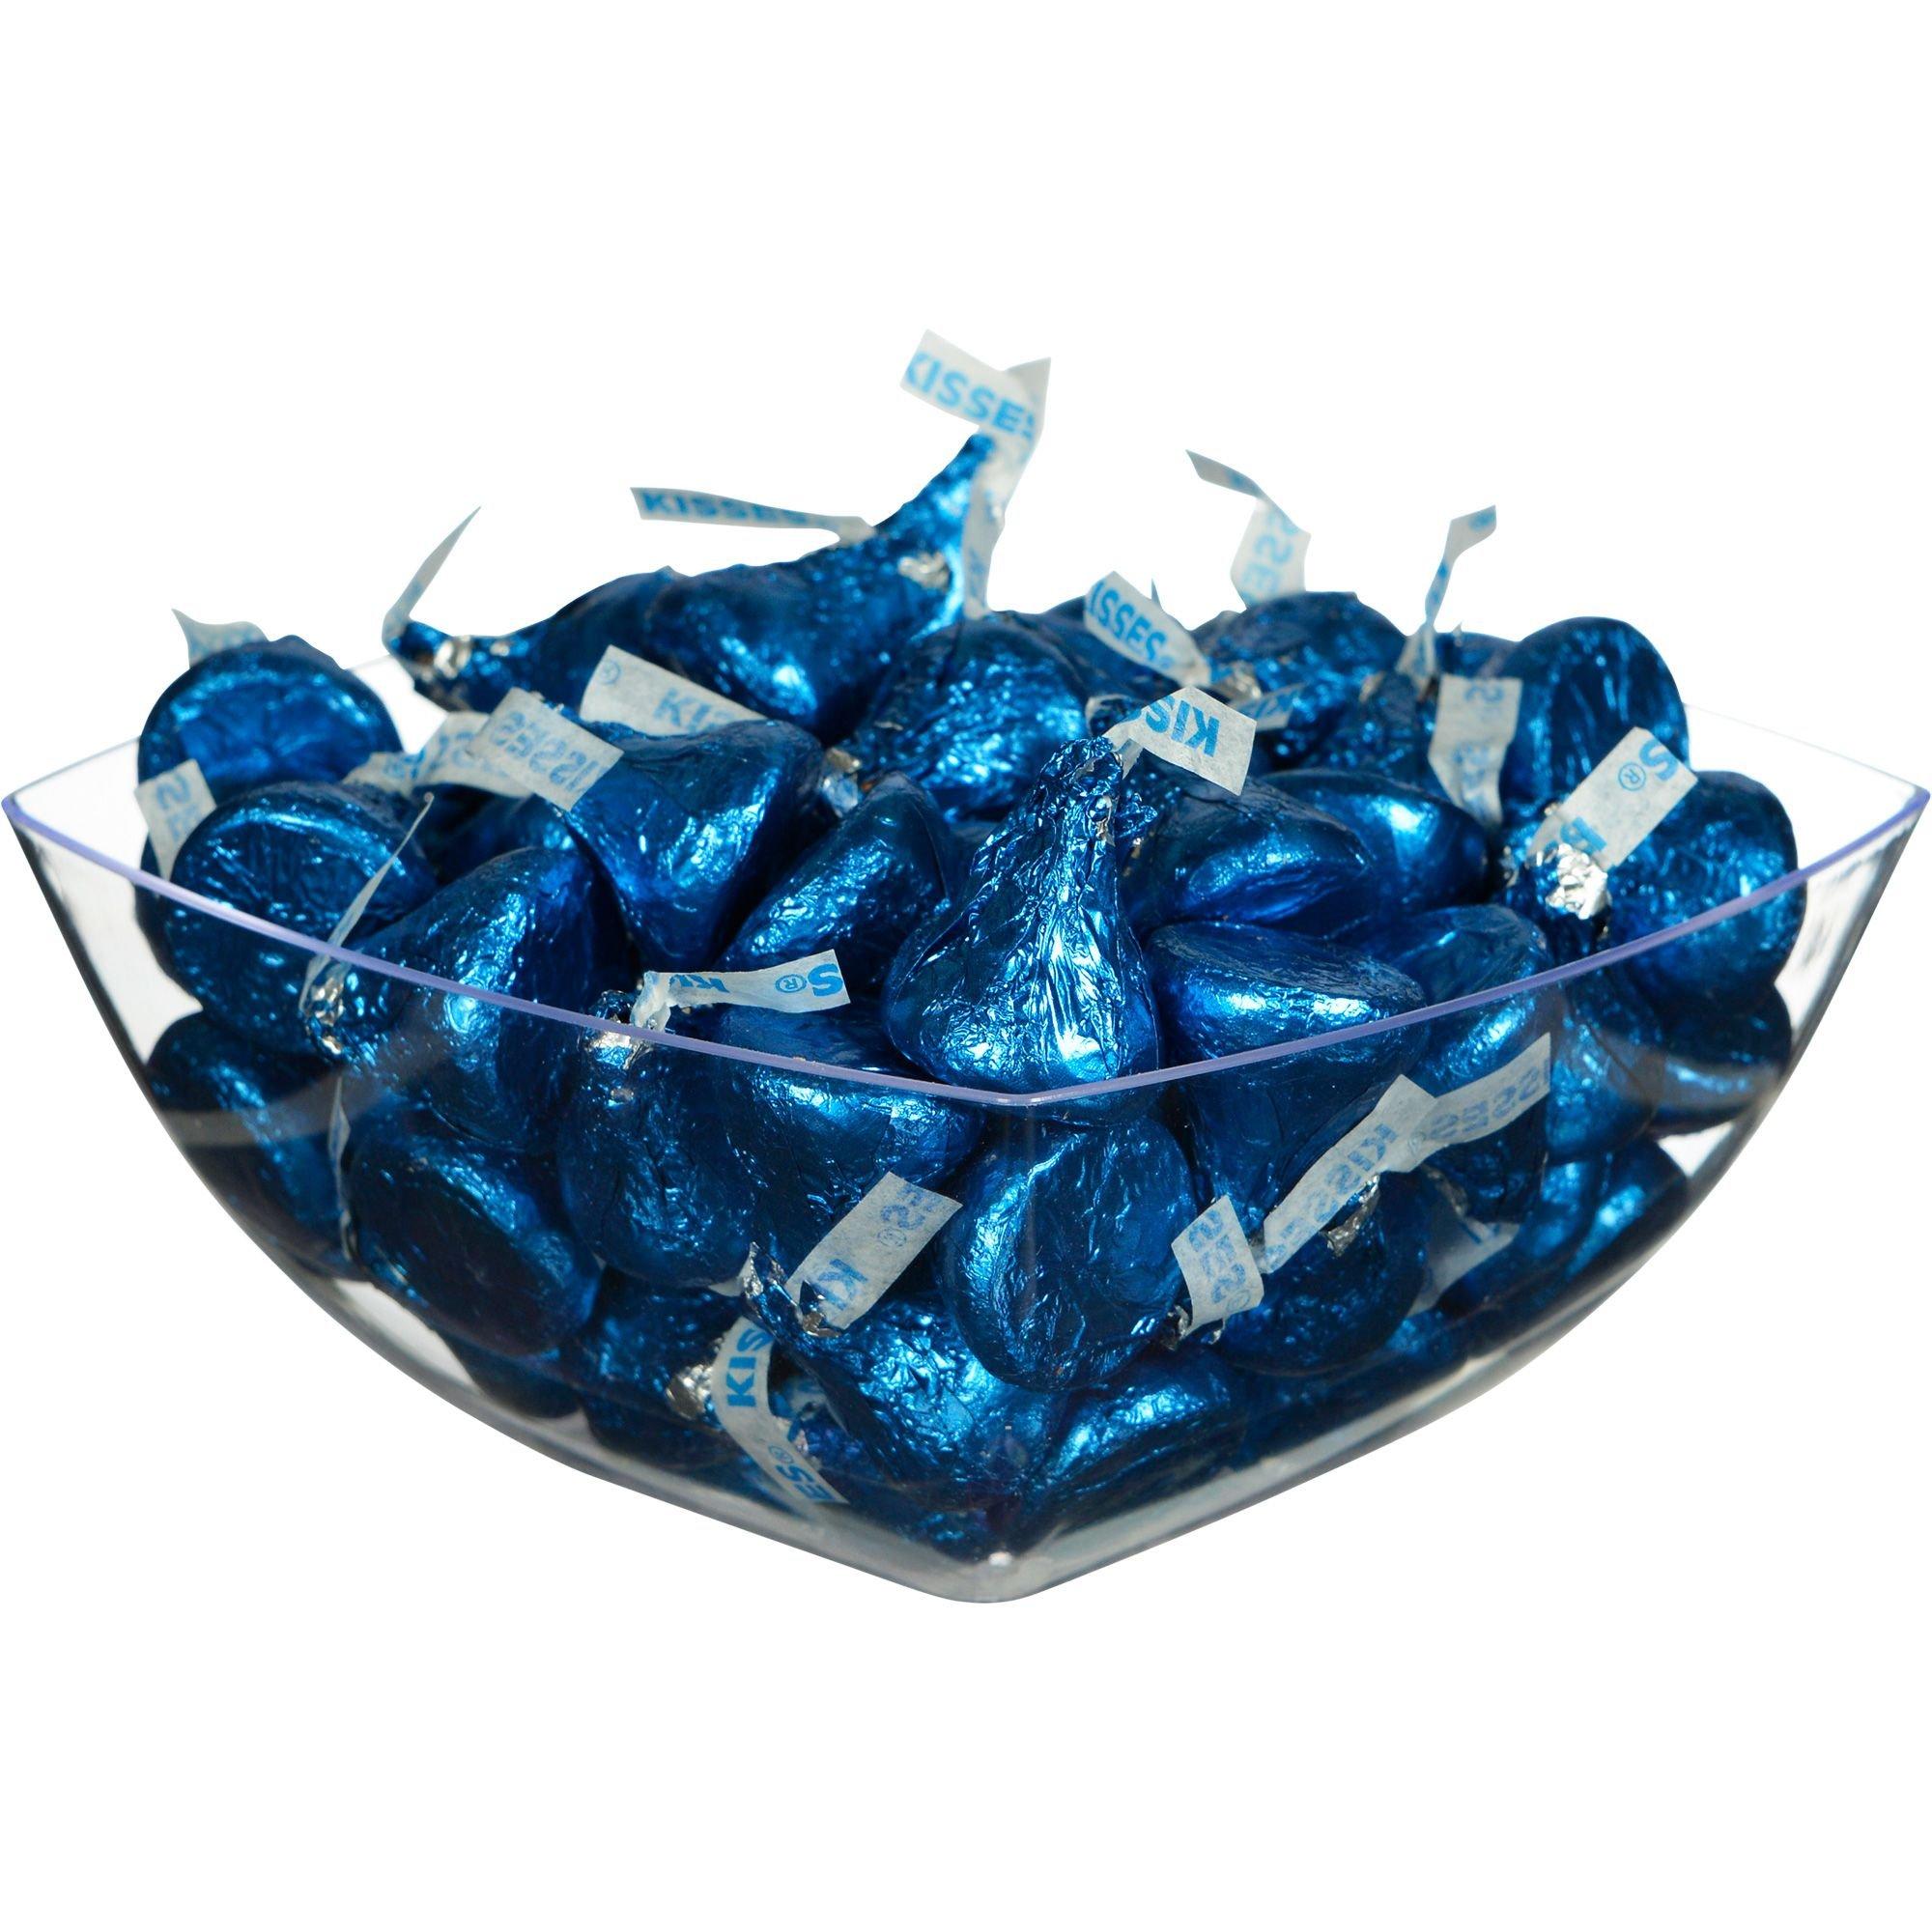 Blue Milk Chocolate M&m's, 16oz Royal/Blue | Party Supplies | Candy